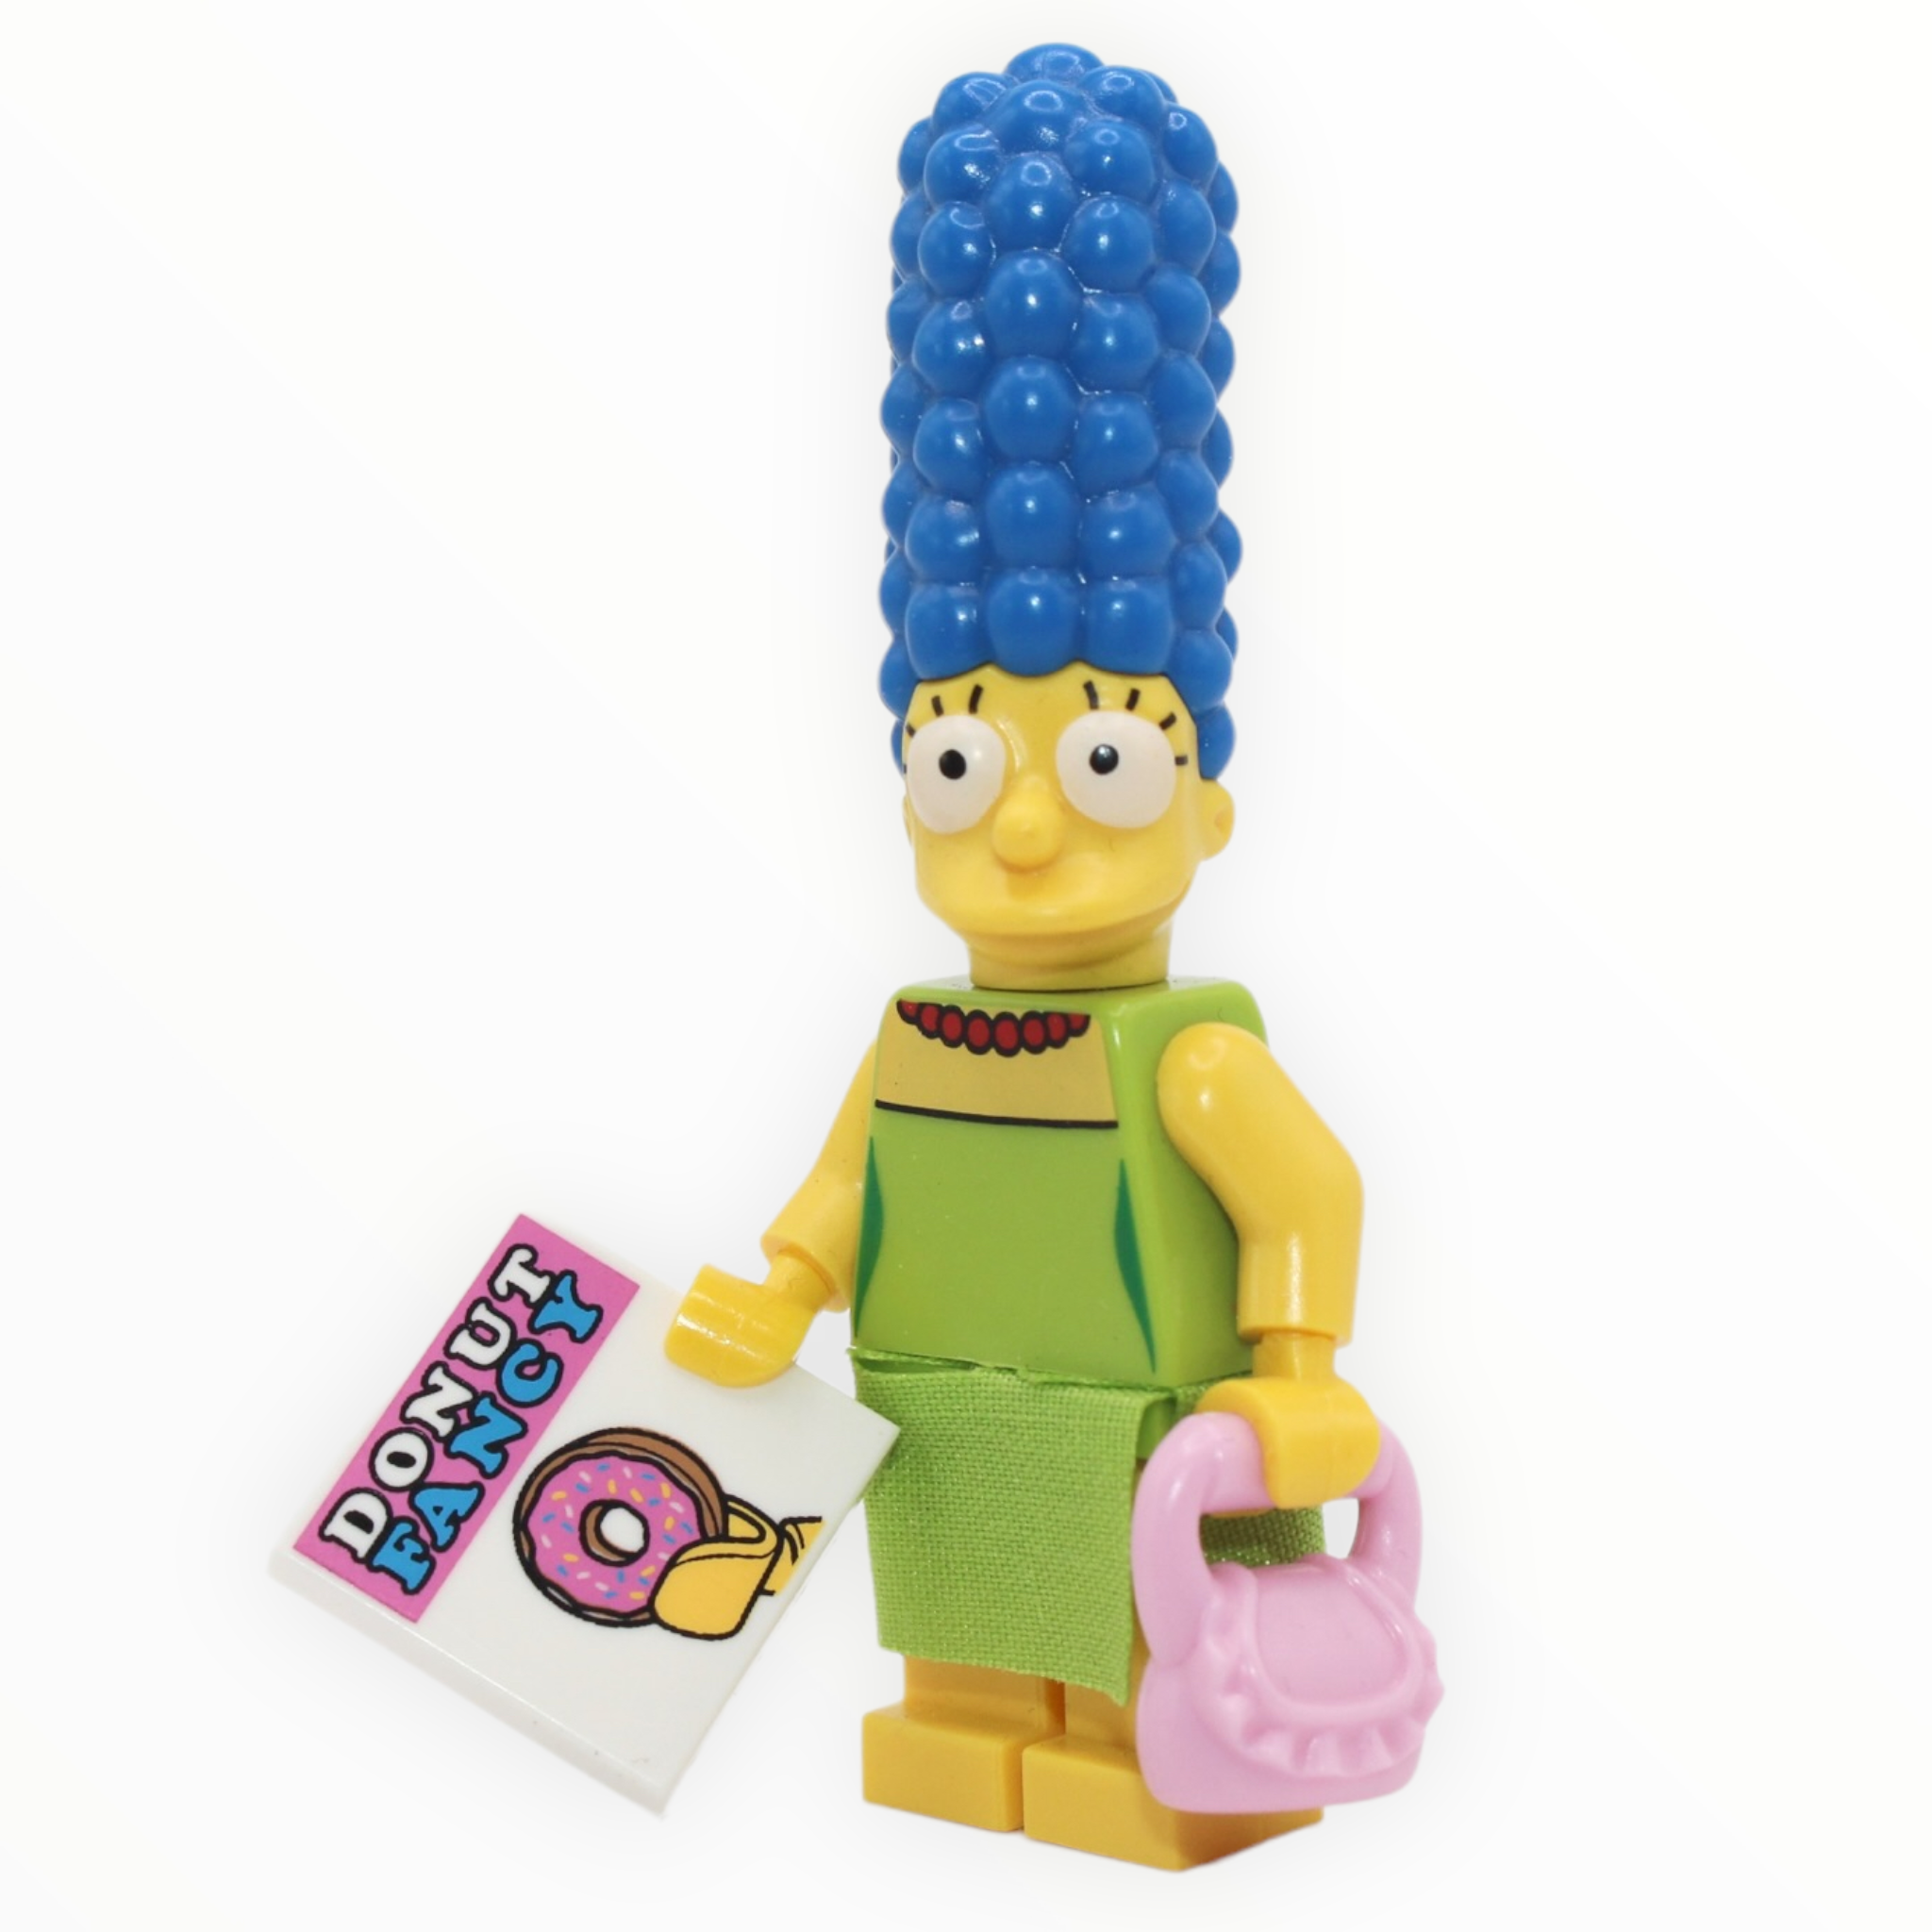 Simpsons Series: Marge Simpson